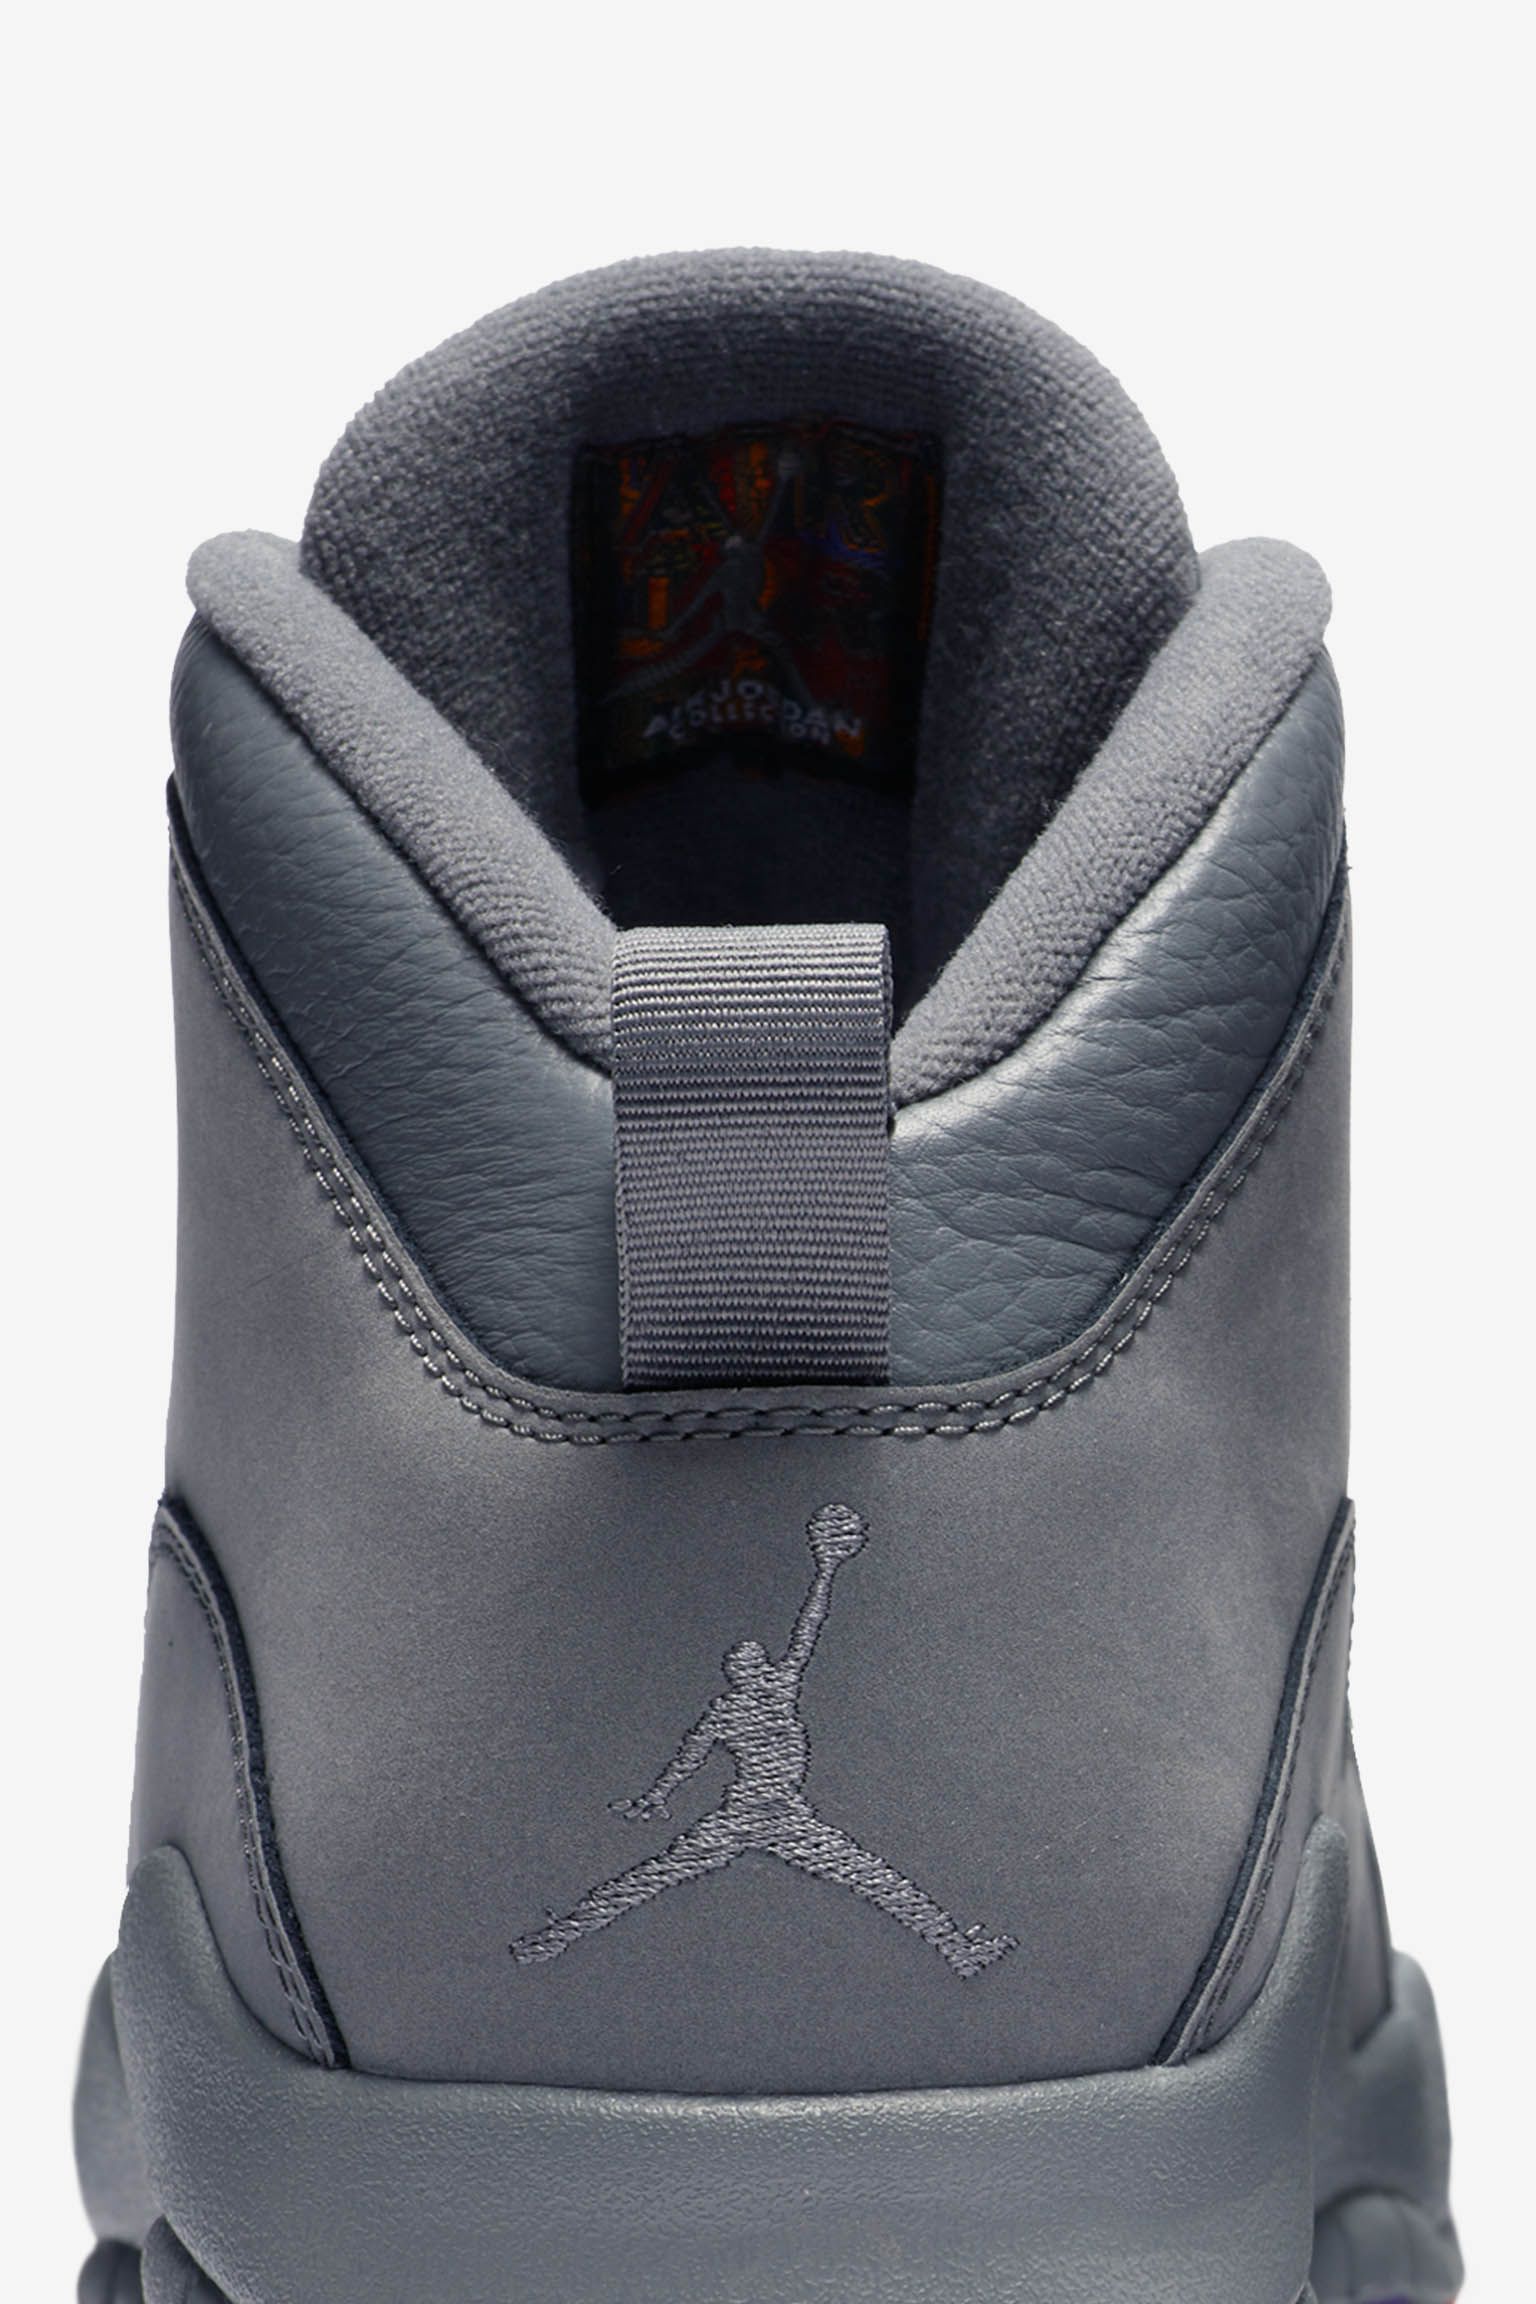 Air Jordan 10 Retro Cool Grey